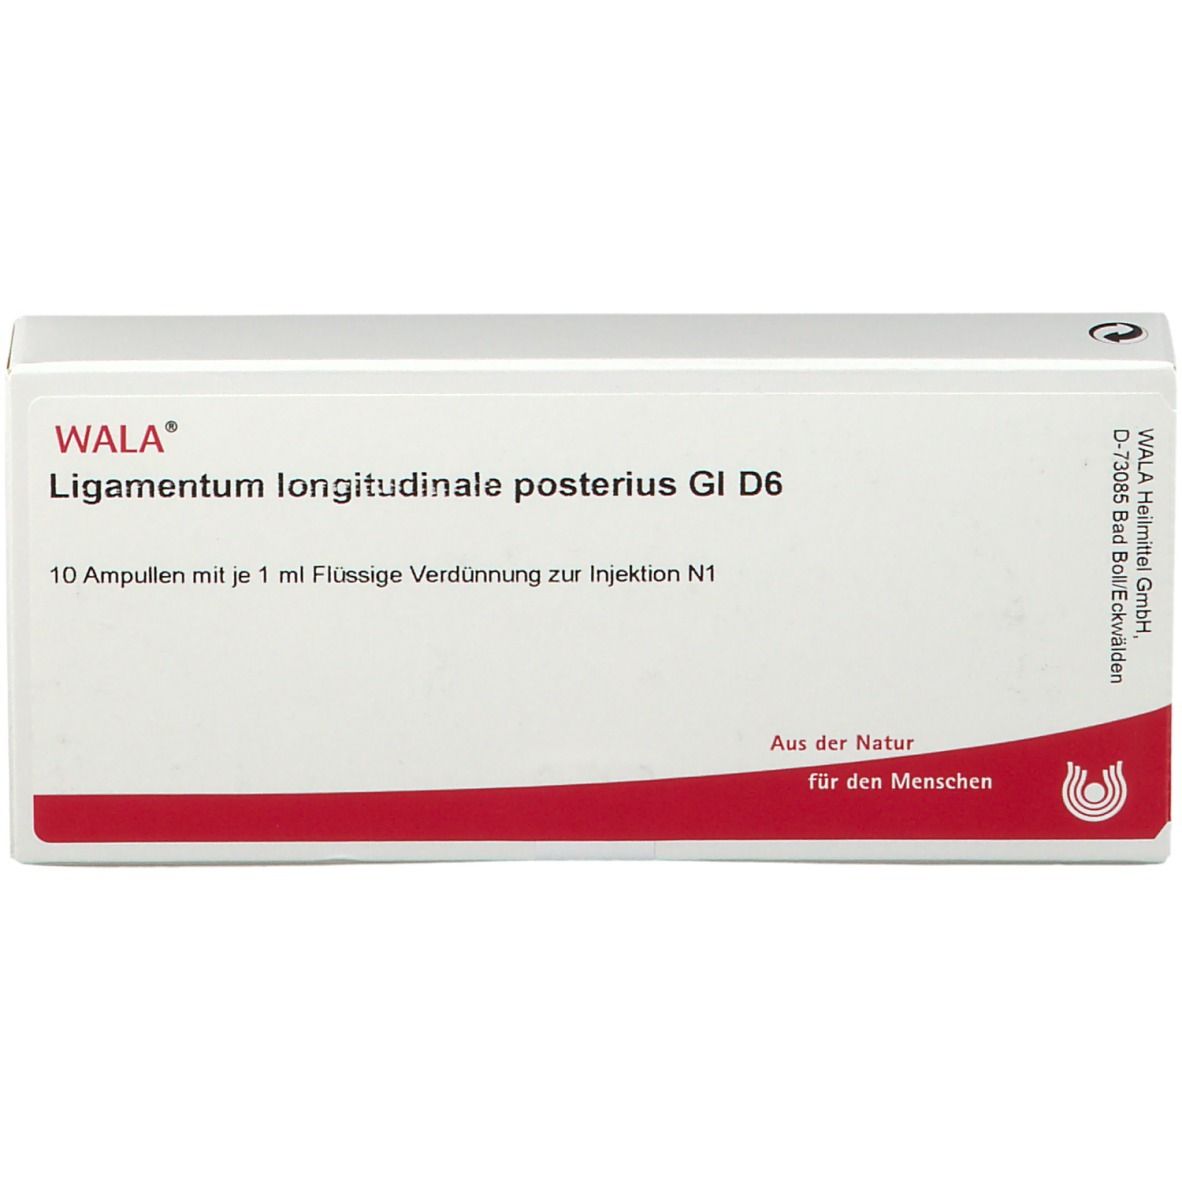 Wala® Ligamentum longitudinale posterius Gl D 6